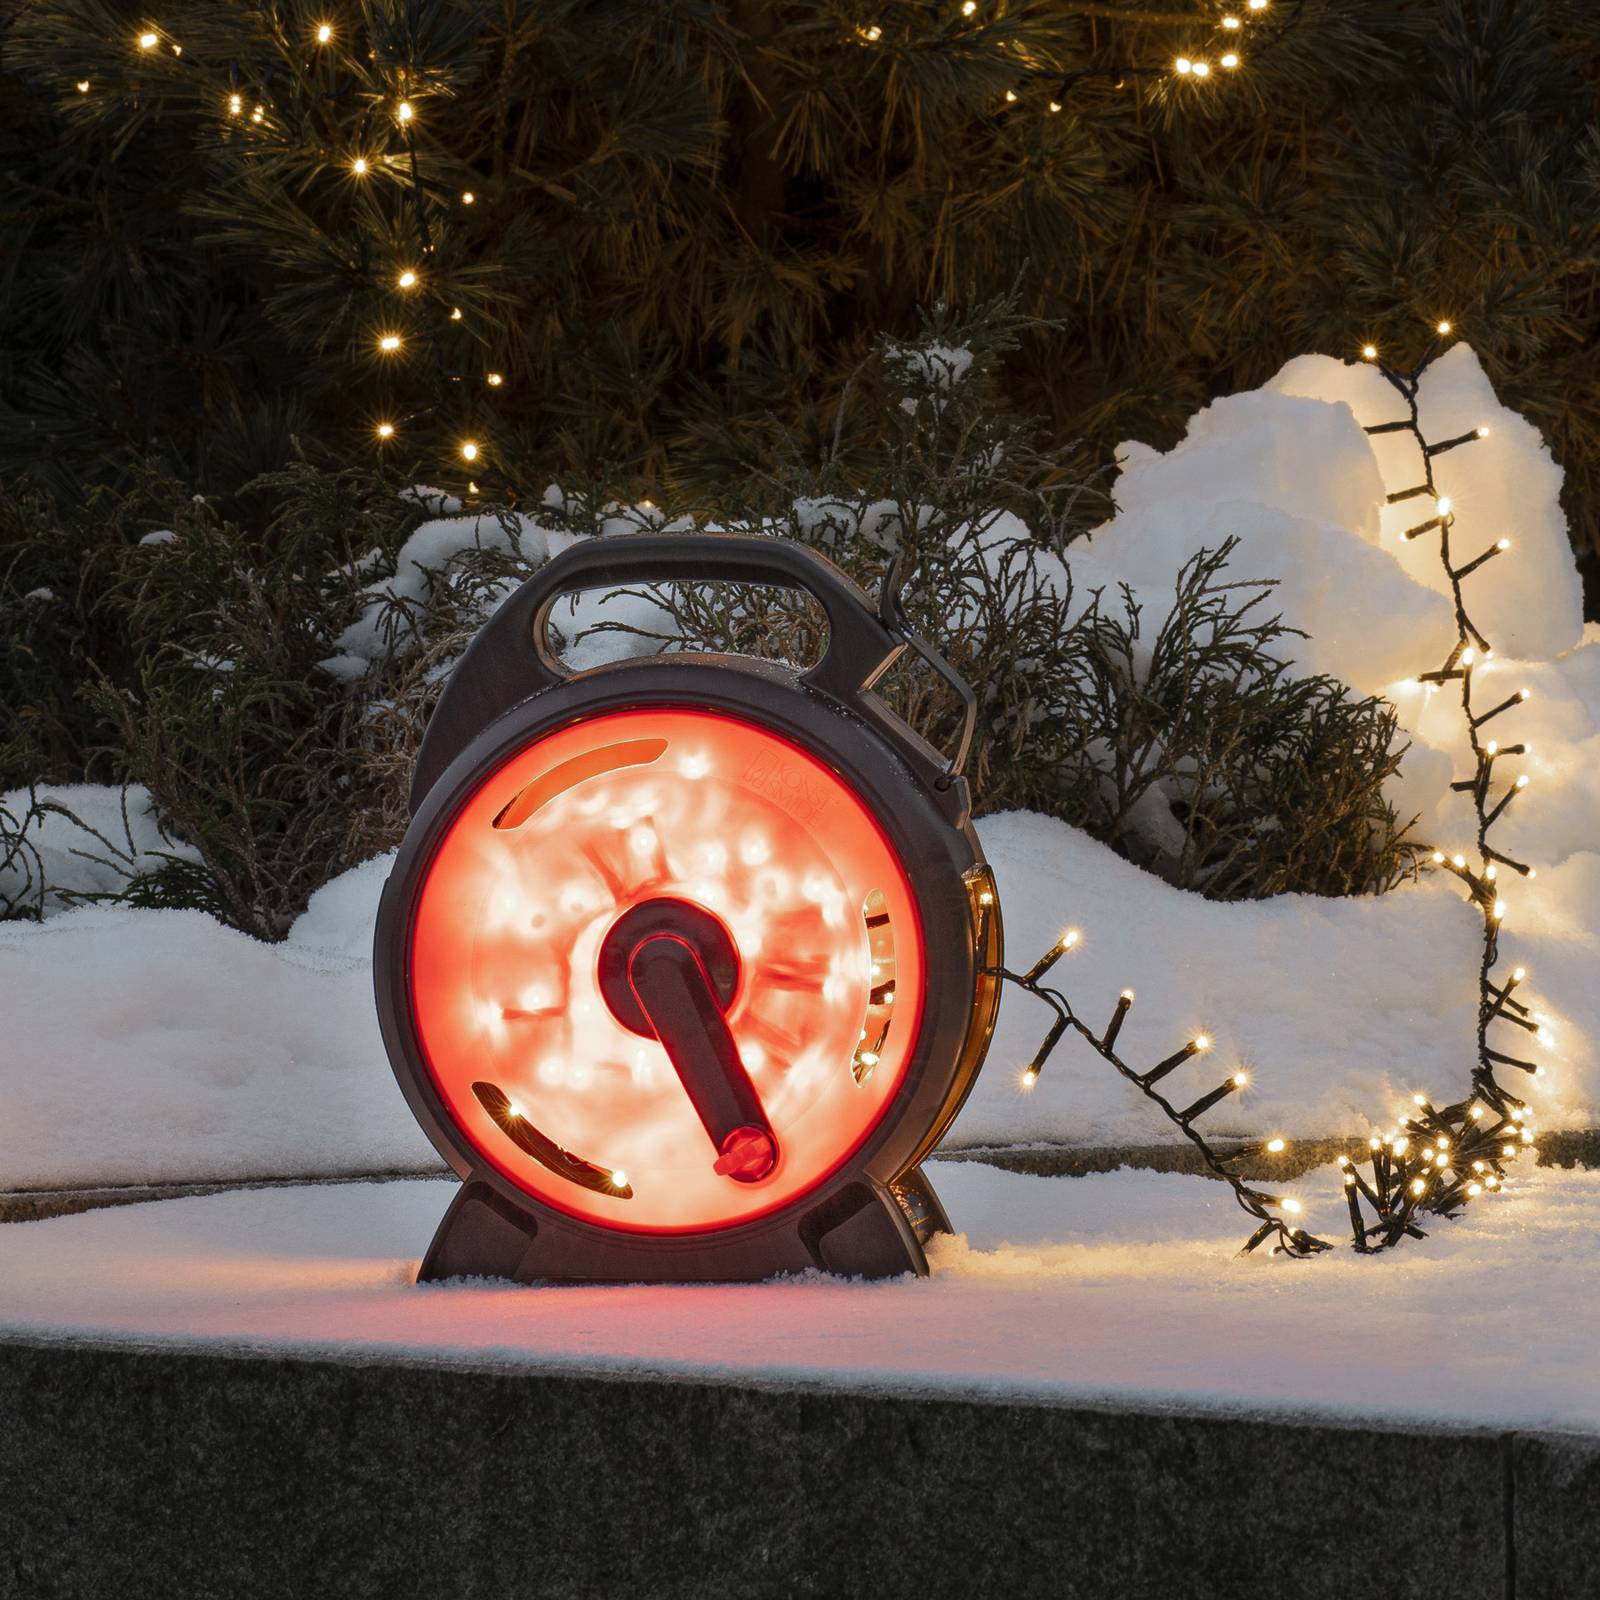 Konstsmide Christmas LED-Lichterkette Compact warmweiß 400 LEDs 8,78m